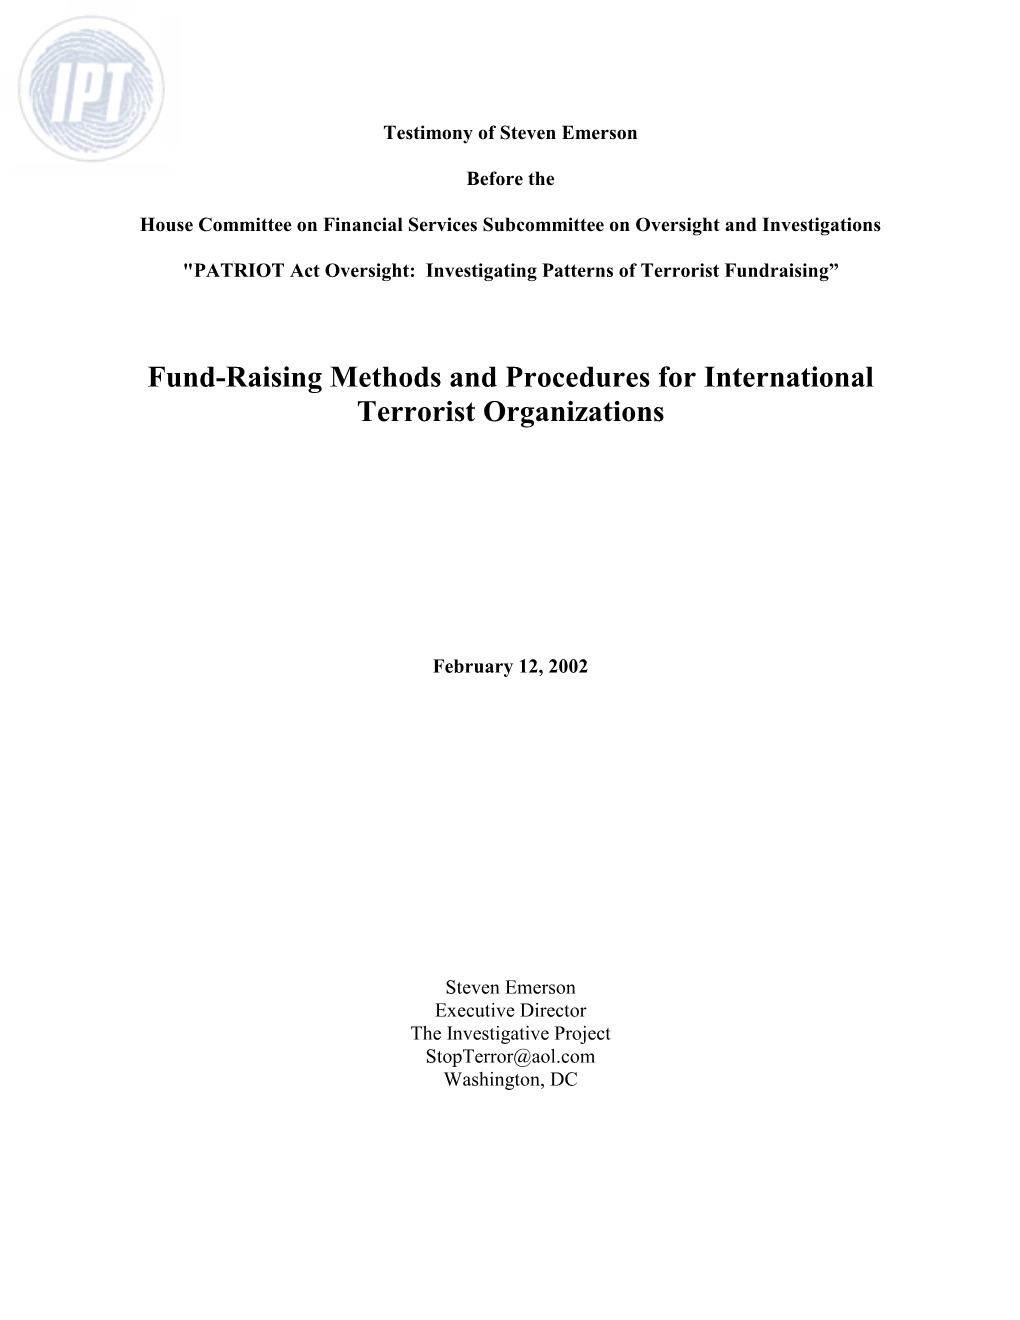 Fundraising Methods and Procedures for Terrorist Organizations